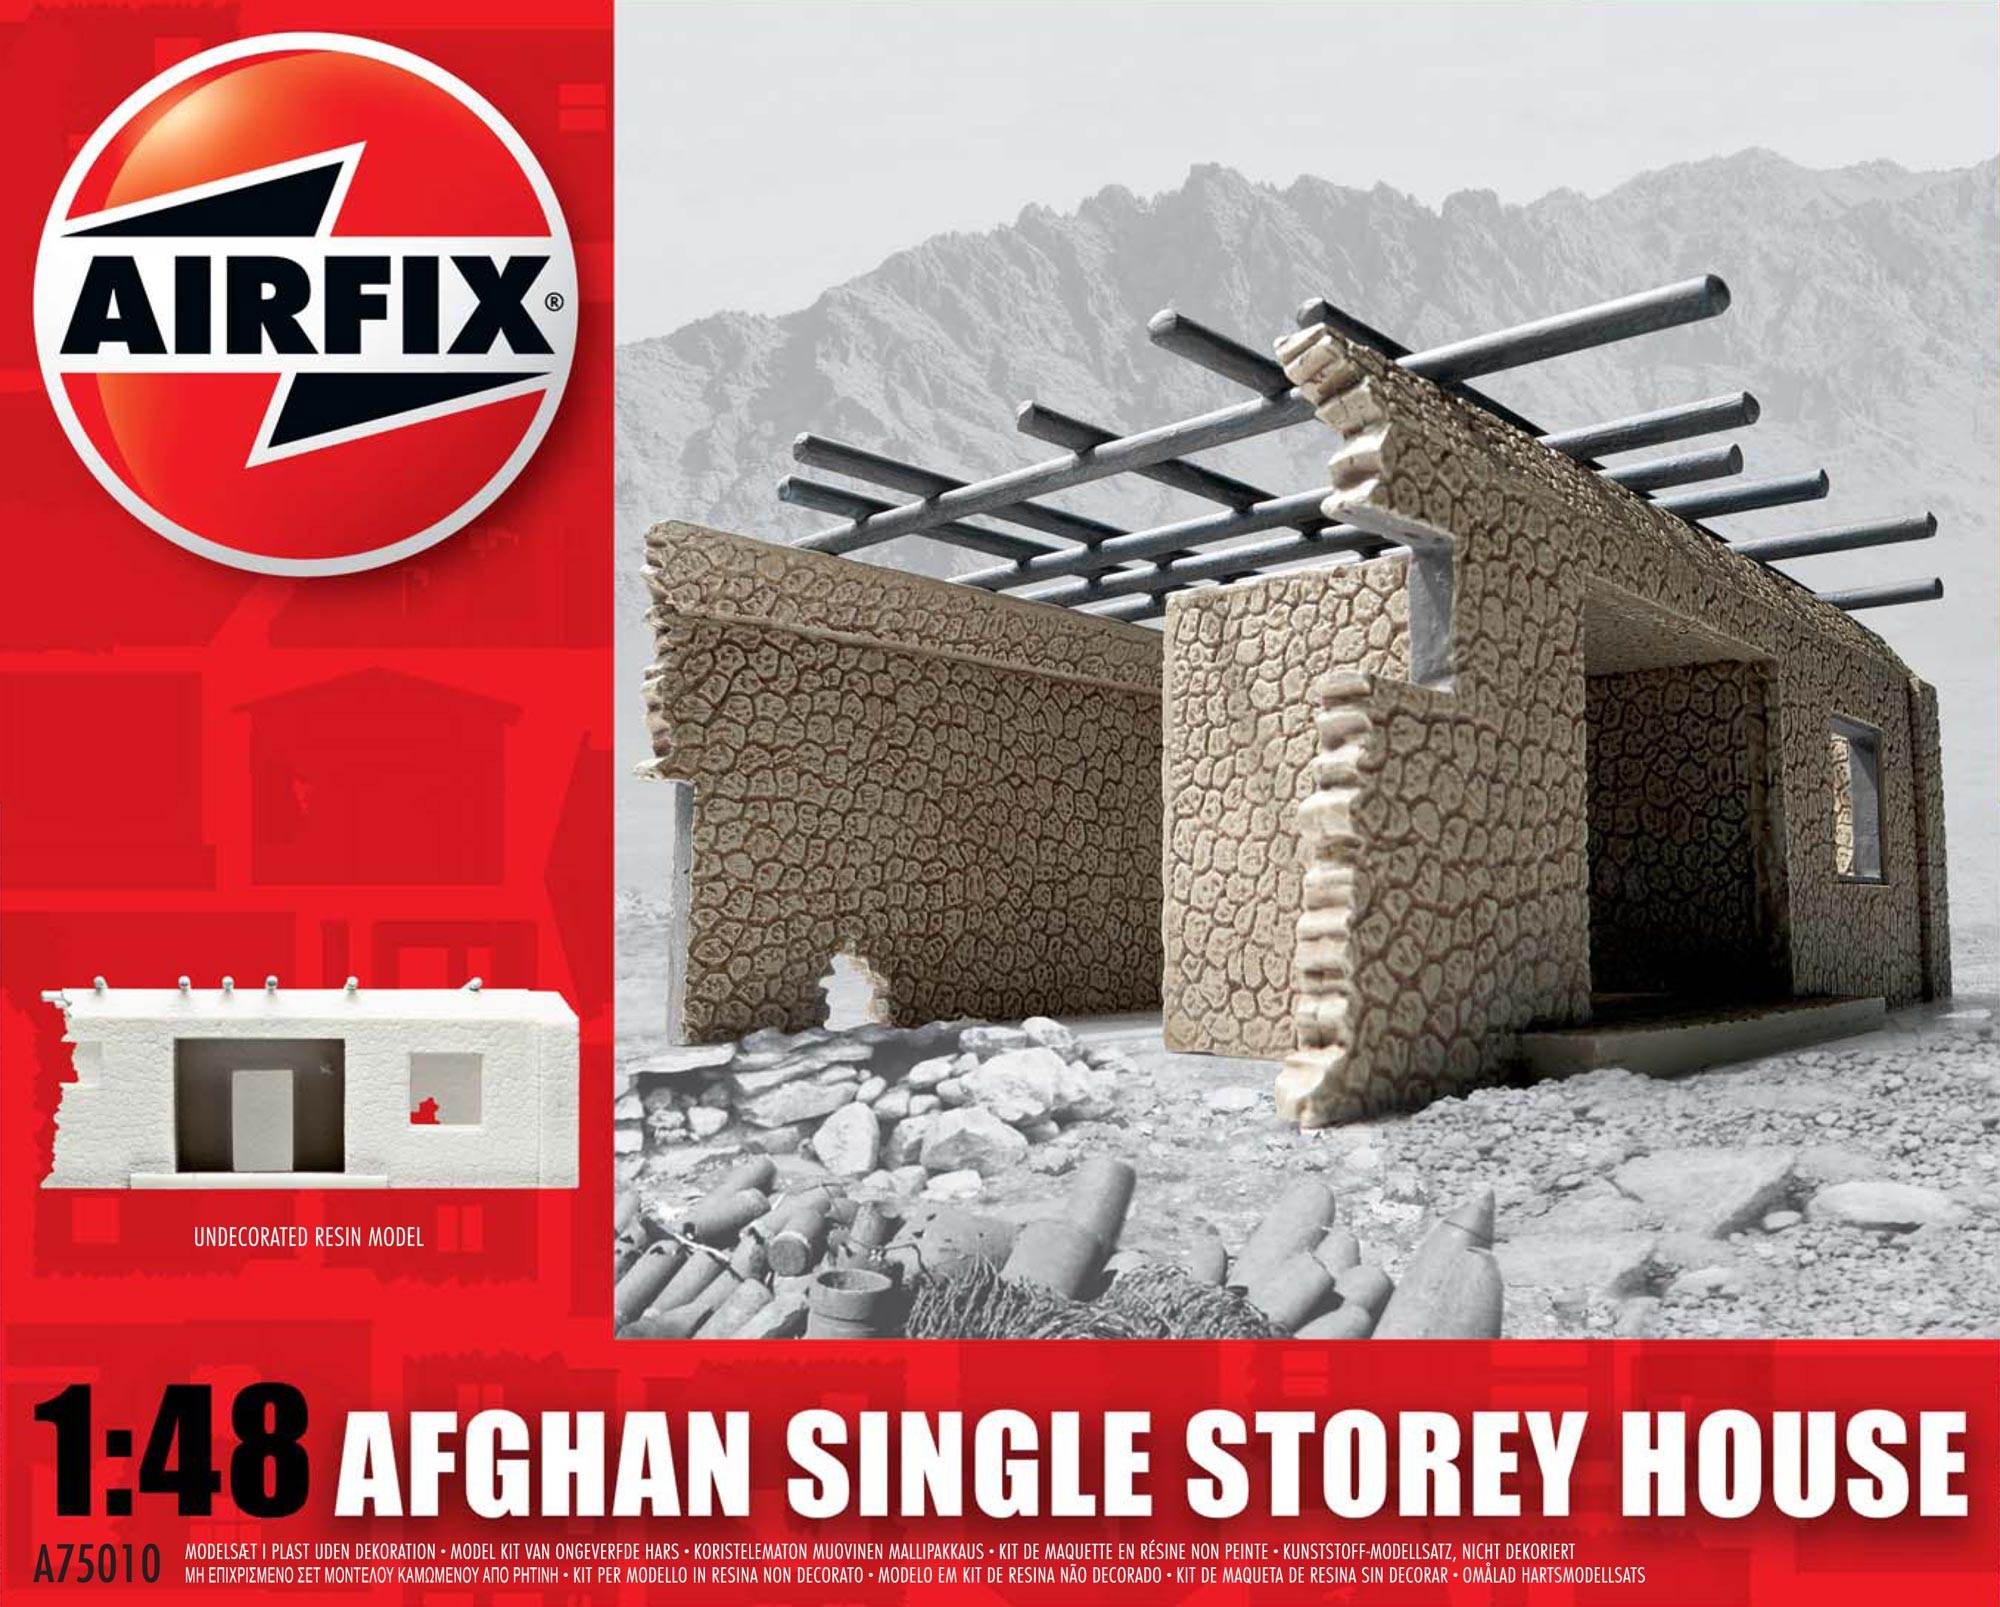 Airfix 1/48 Model Afghan Single Storey House